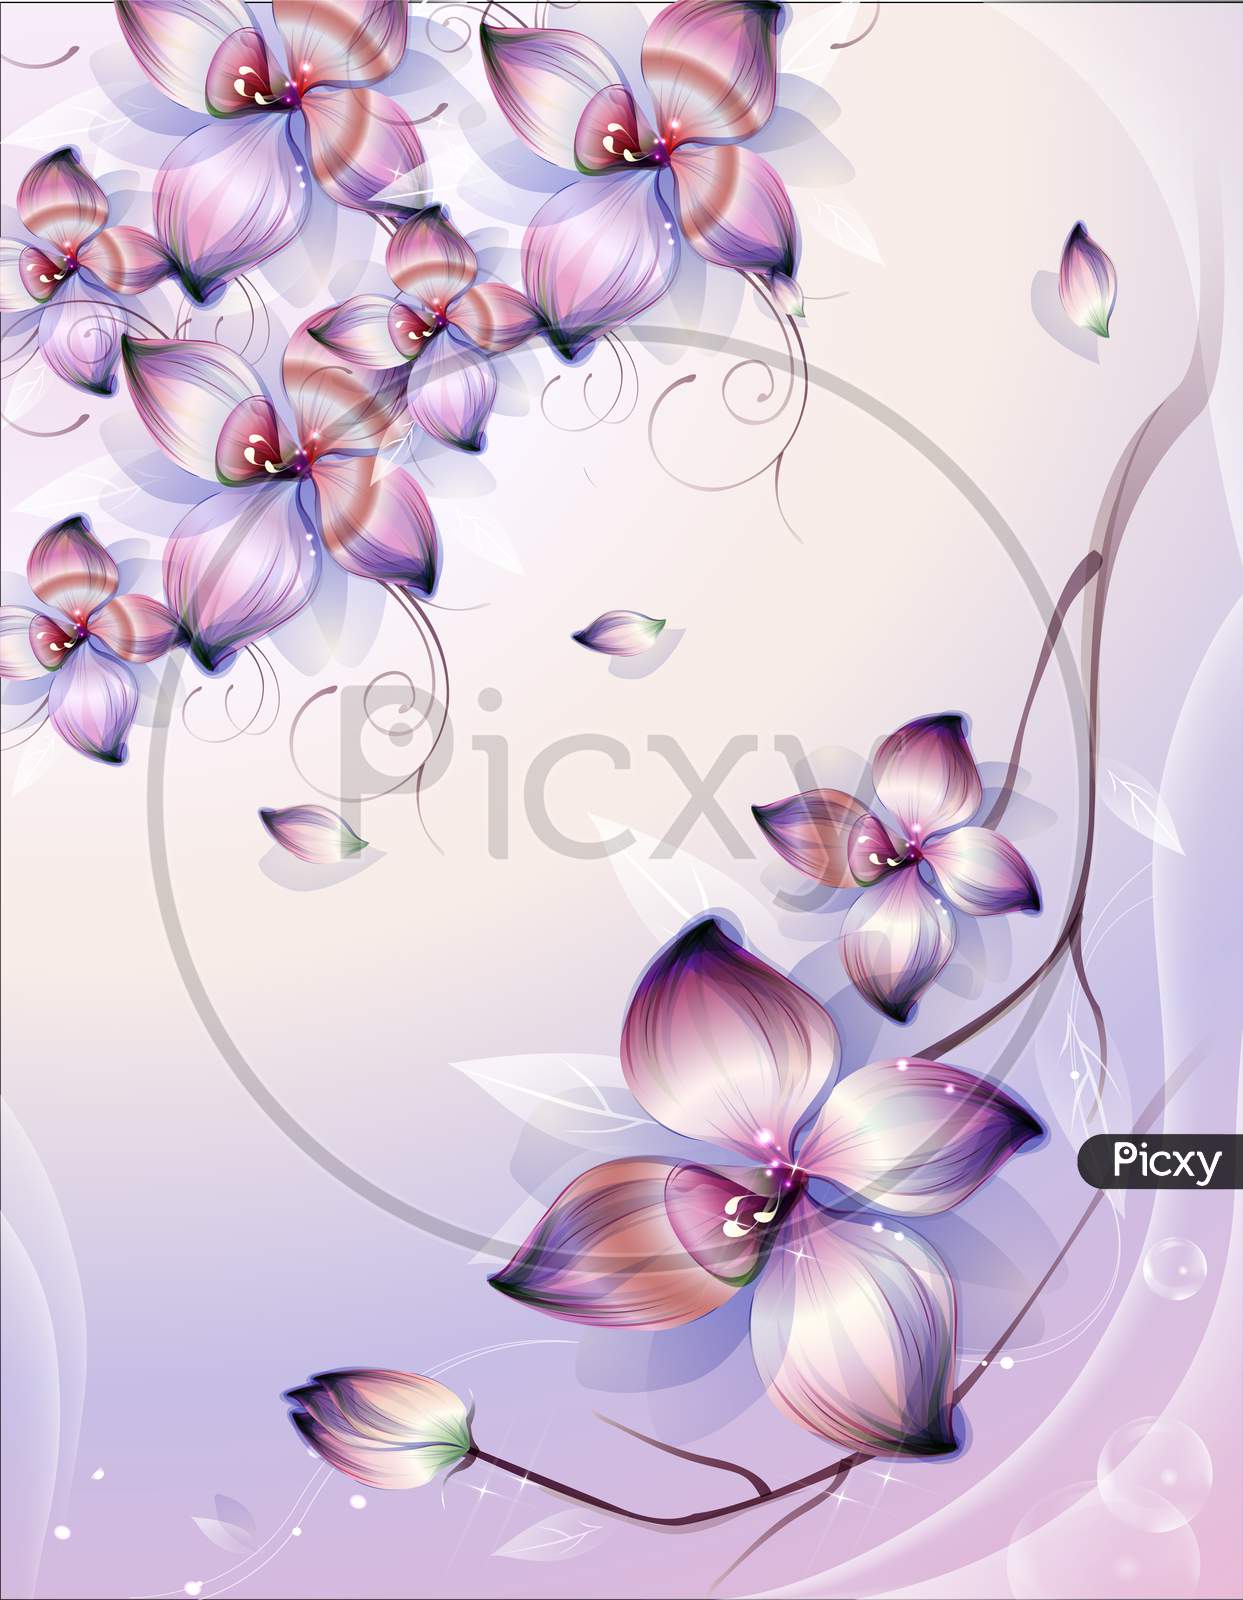 Beautiful Purpul Flowers With Nice background 3d  Illustartion Wallpaper Design.